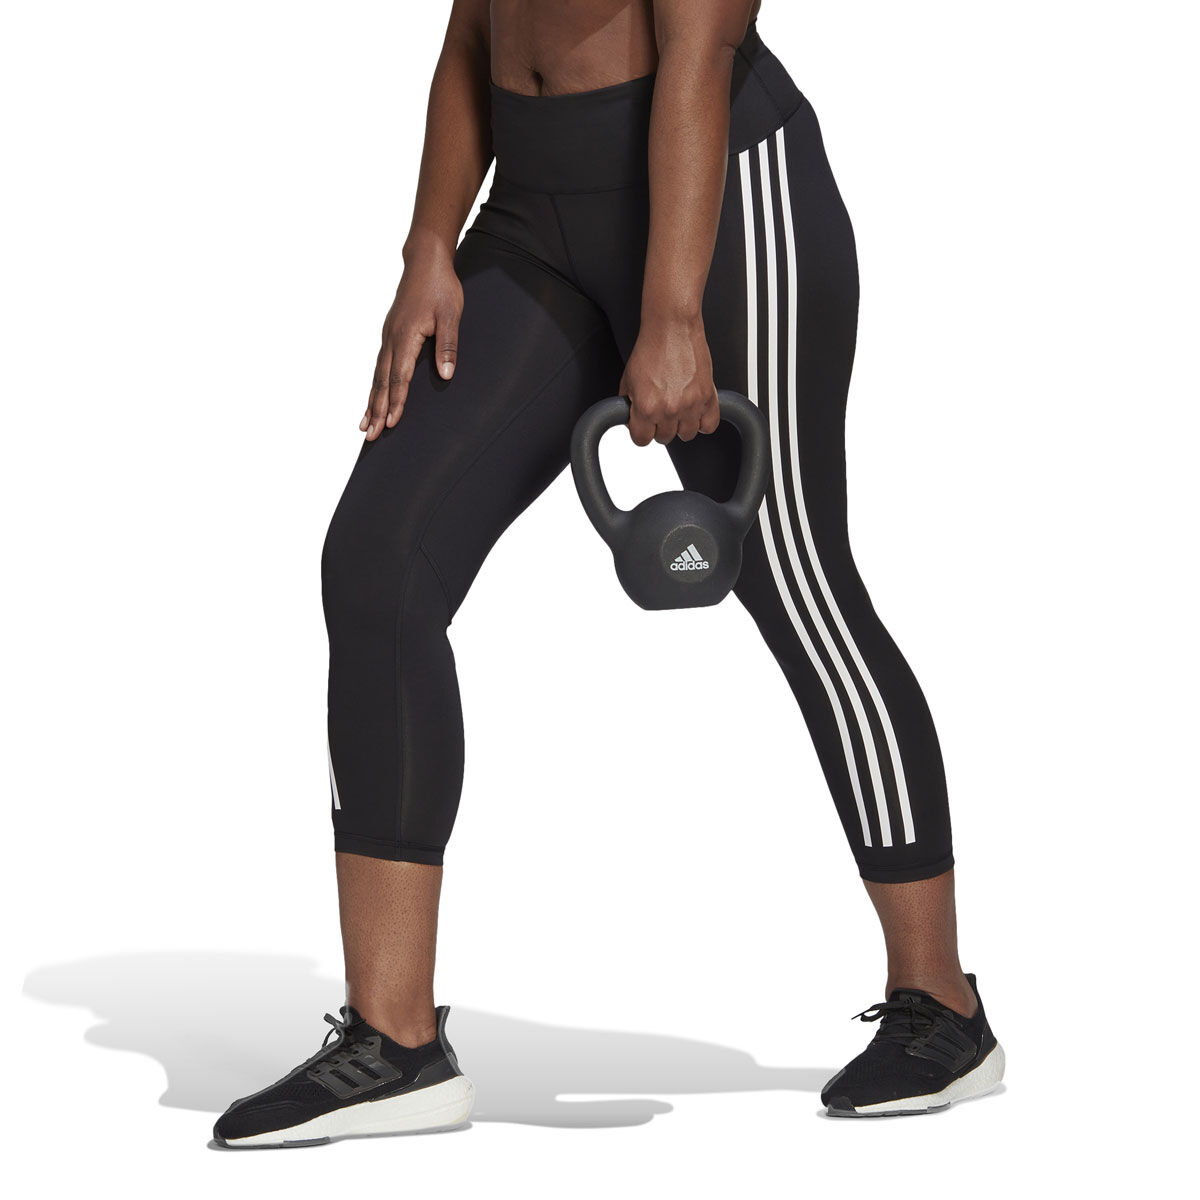 adidas Women's Tights, adidas Yoga Pants